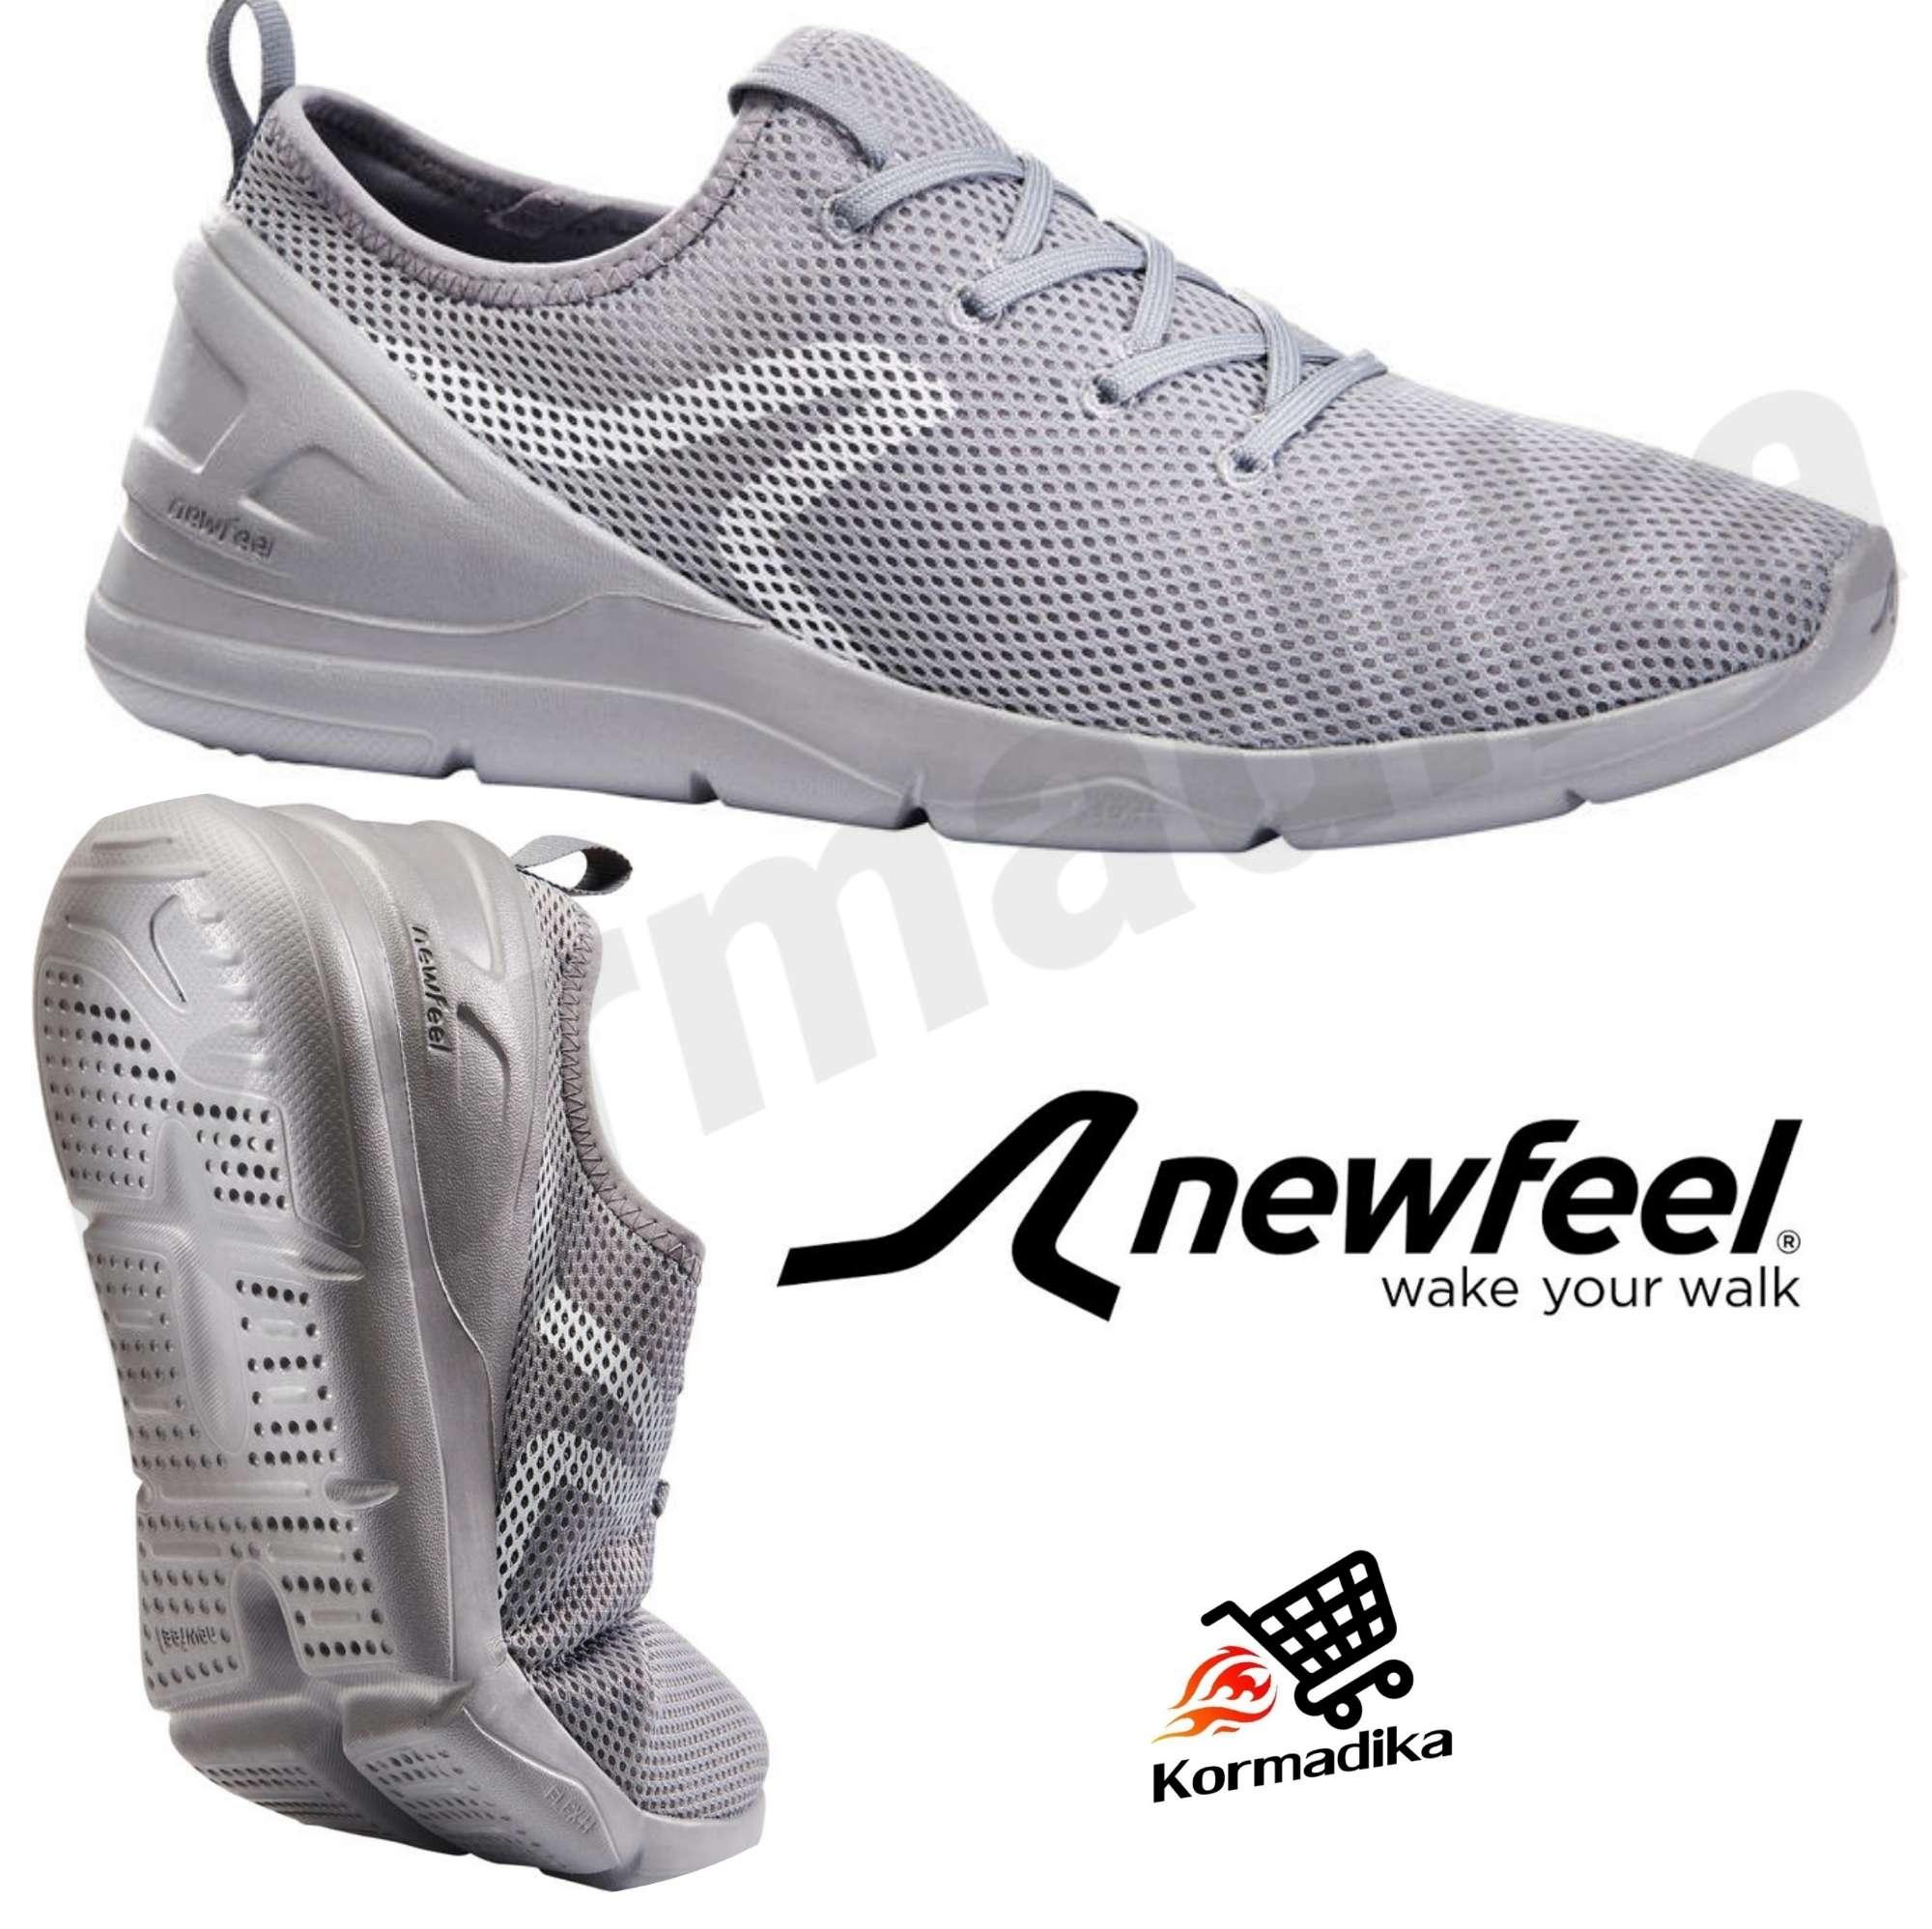 Exercise shoes รองเท้า Running Shoes รองเท้าใส่เดิน Newfeel​ รองเท้าออก​กำลังกาย​ Fitness walking shoes รองเท้าผ้าใบ รองเท้าใส่เดินเพื่อสุขภาพผู้ชายรุ่น PW 100